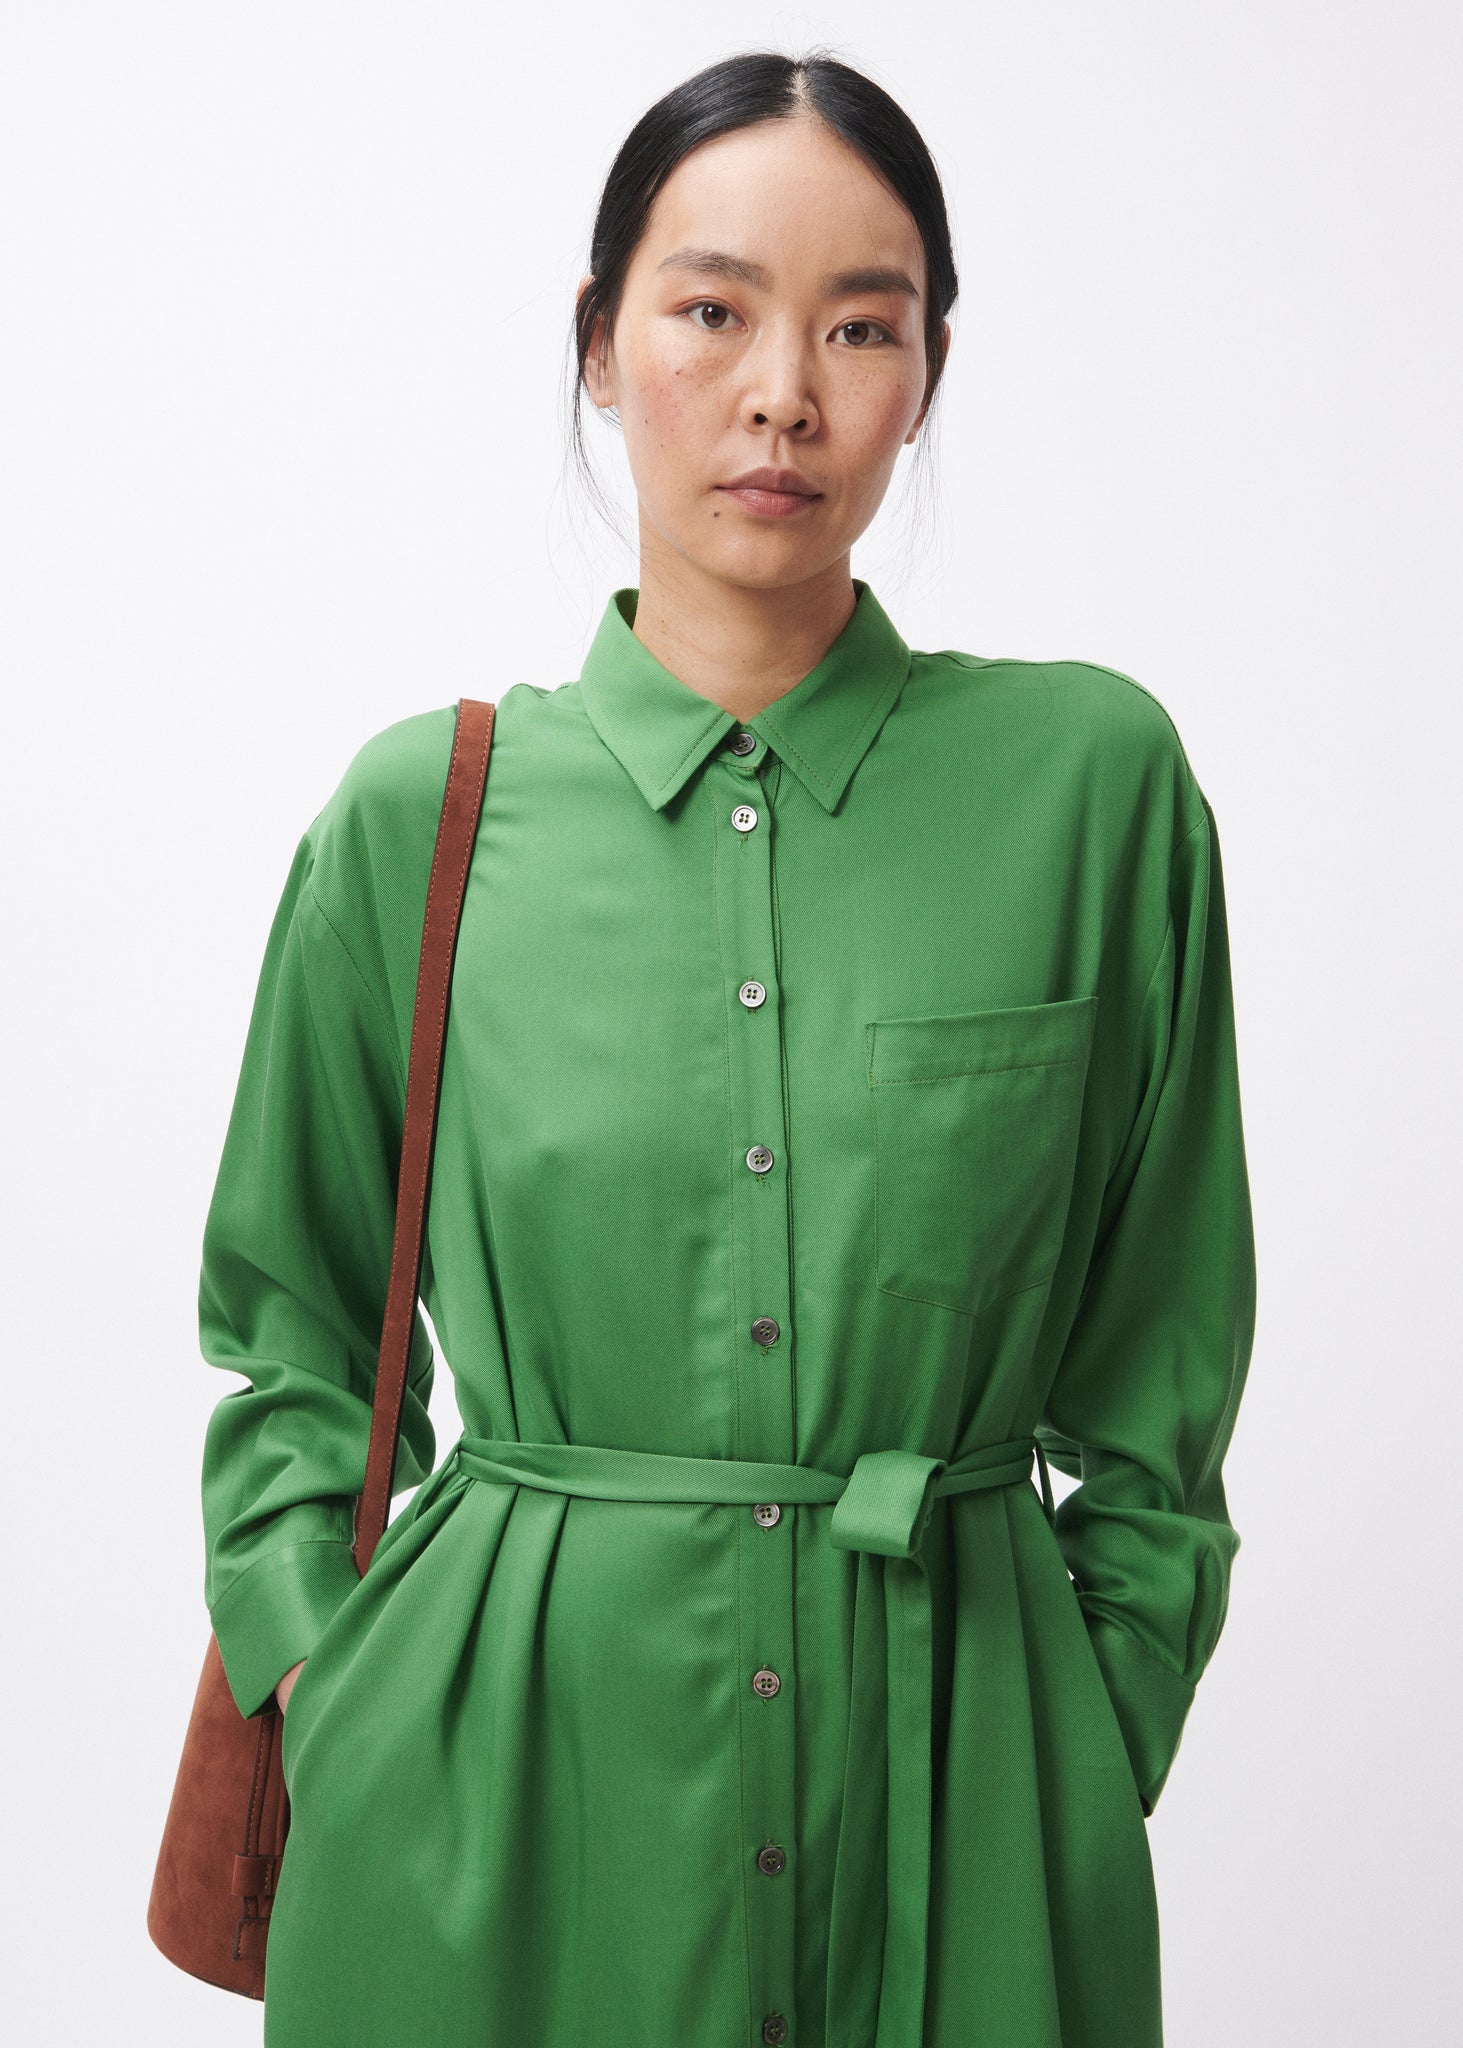 Frnch F12529 green buttoned midi dress